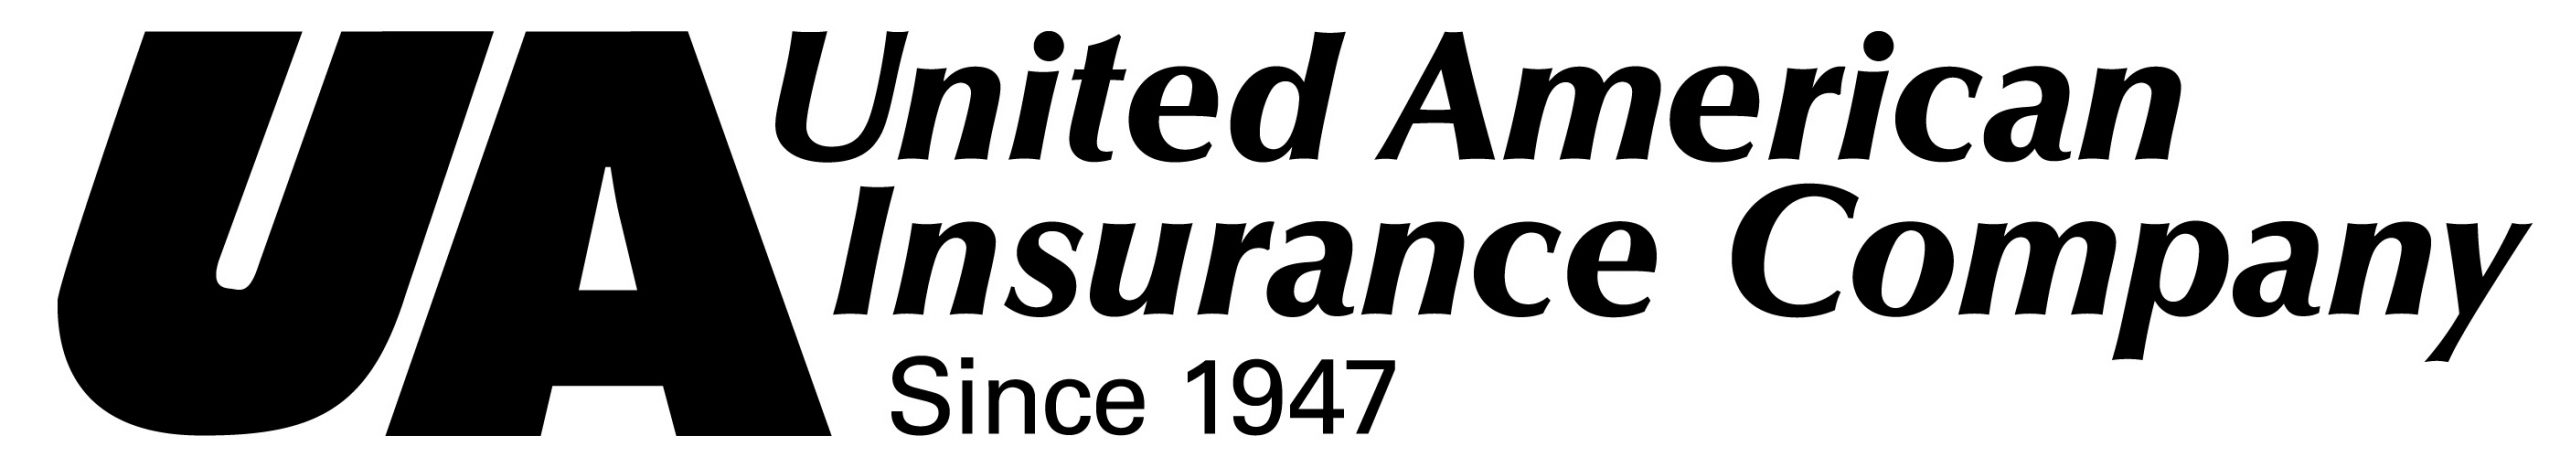 United American Insurance Company logo | Medicare Eligibility